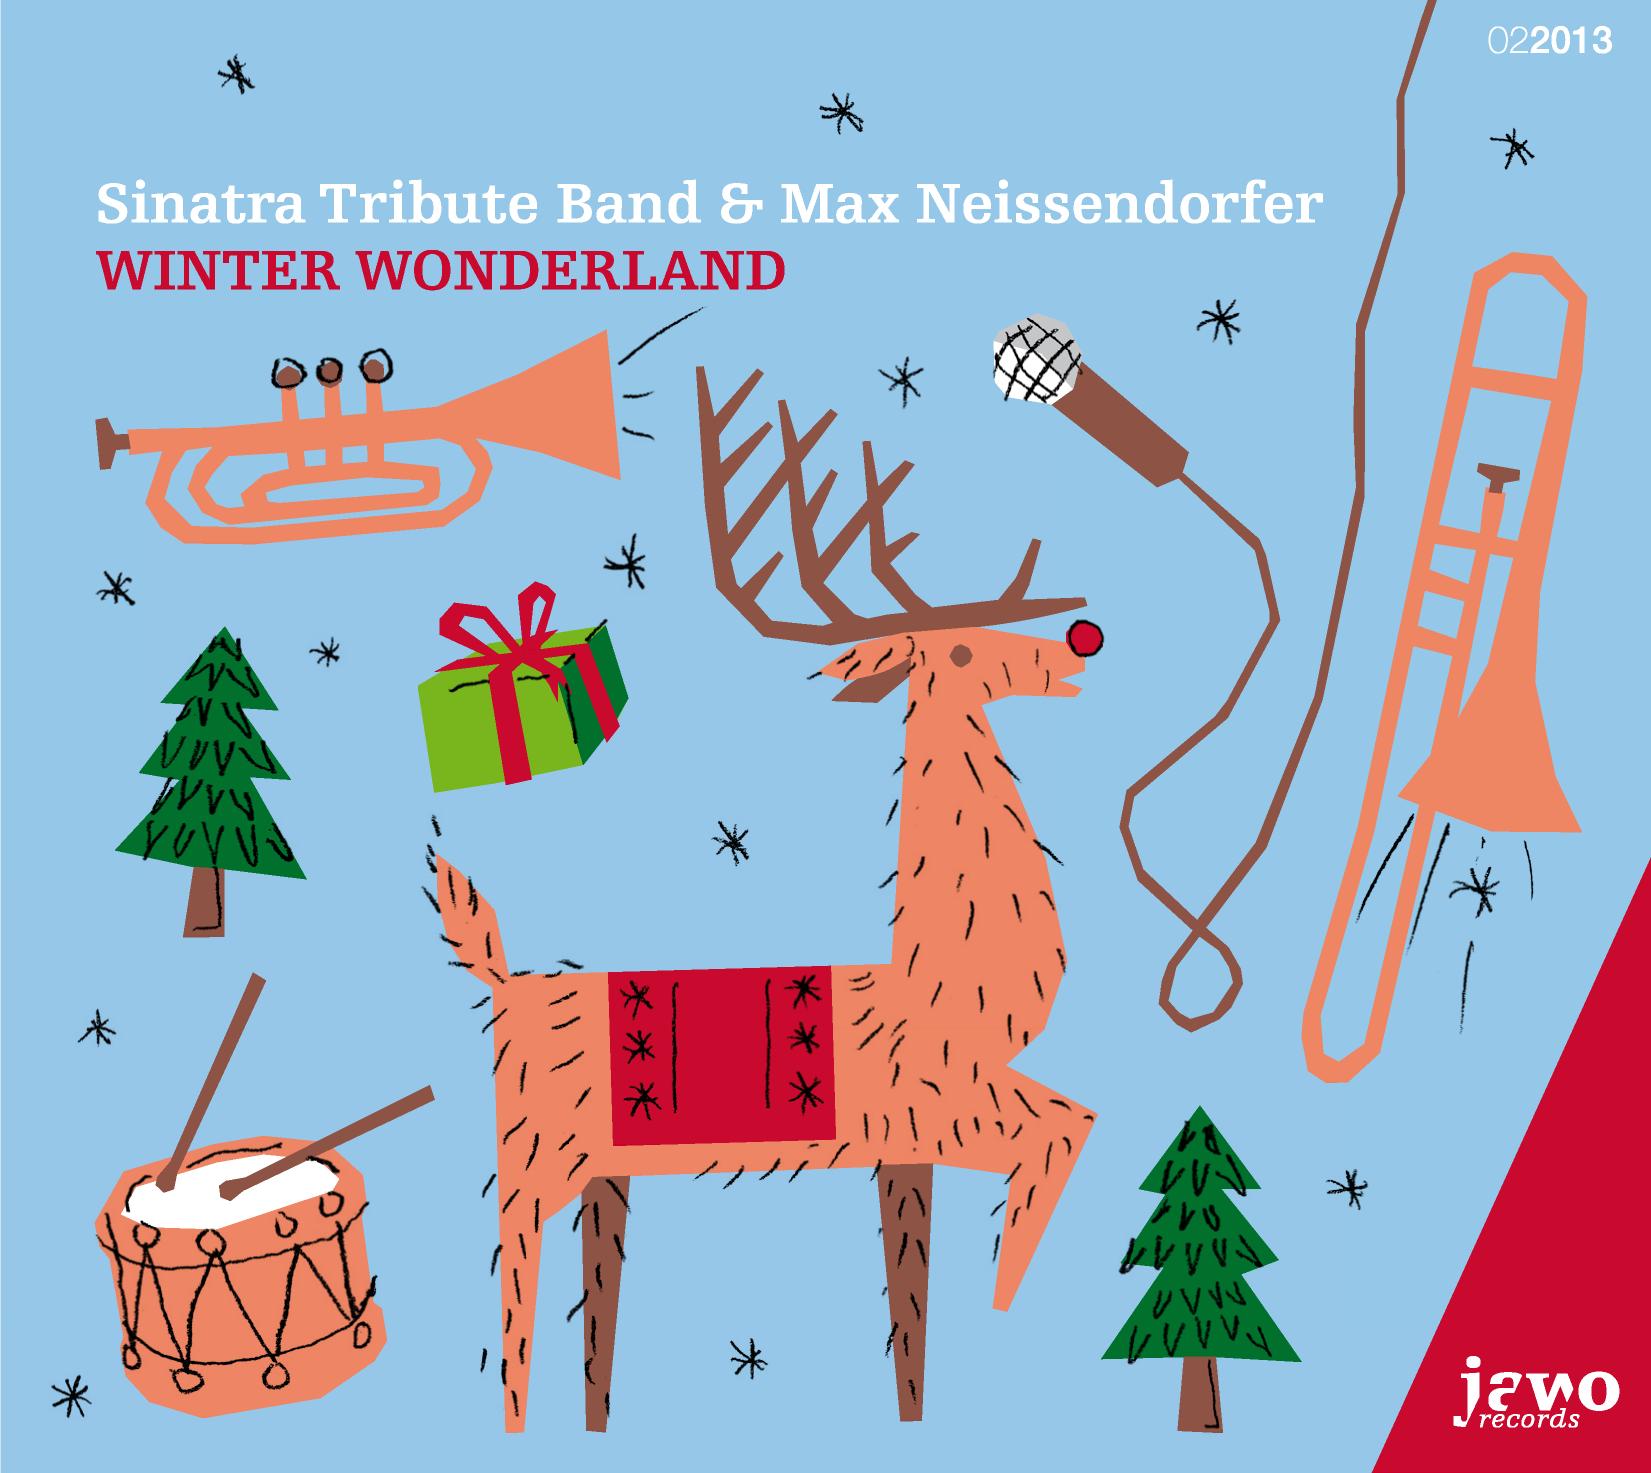  SINATRA TRIBUTE BAND & MAX NEISSENDORFER: Winter Wonderland 